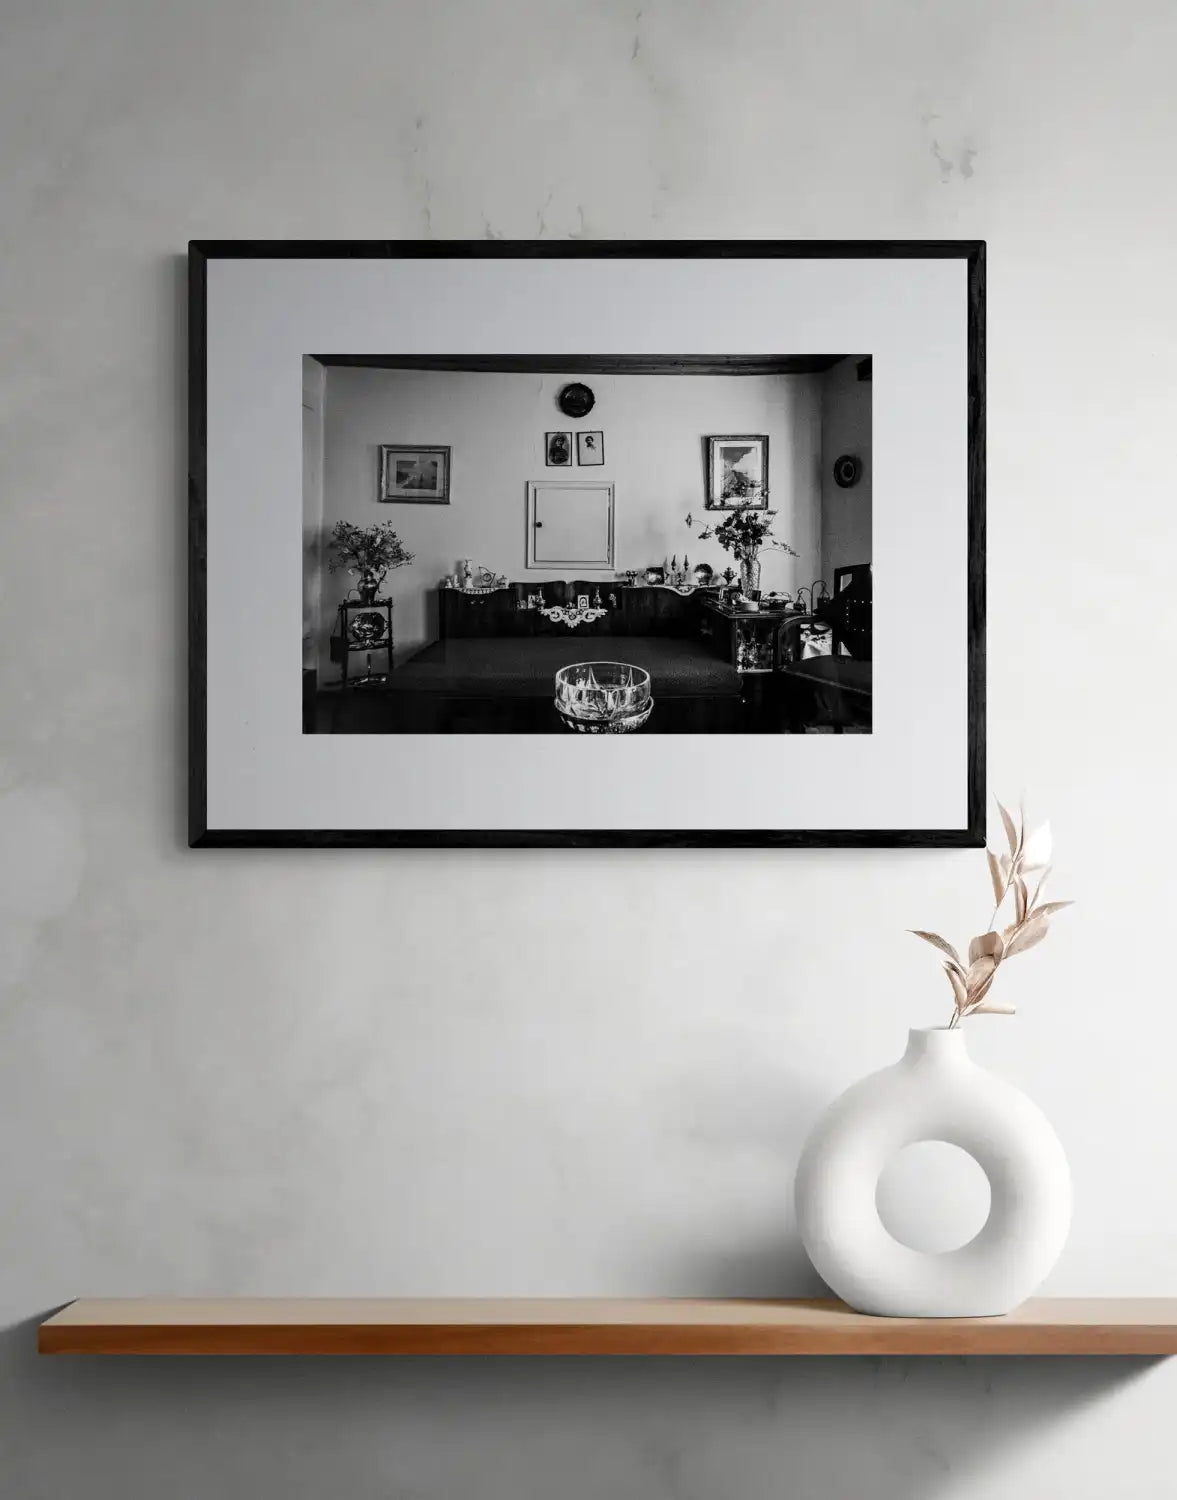 Ioannina, Epirus, Greece | Home Interior | Black-and-White Wall Art Photography - single print framed